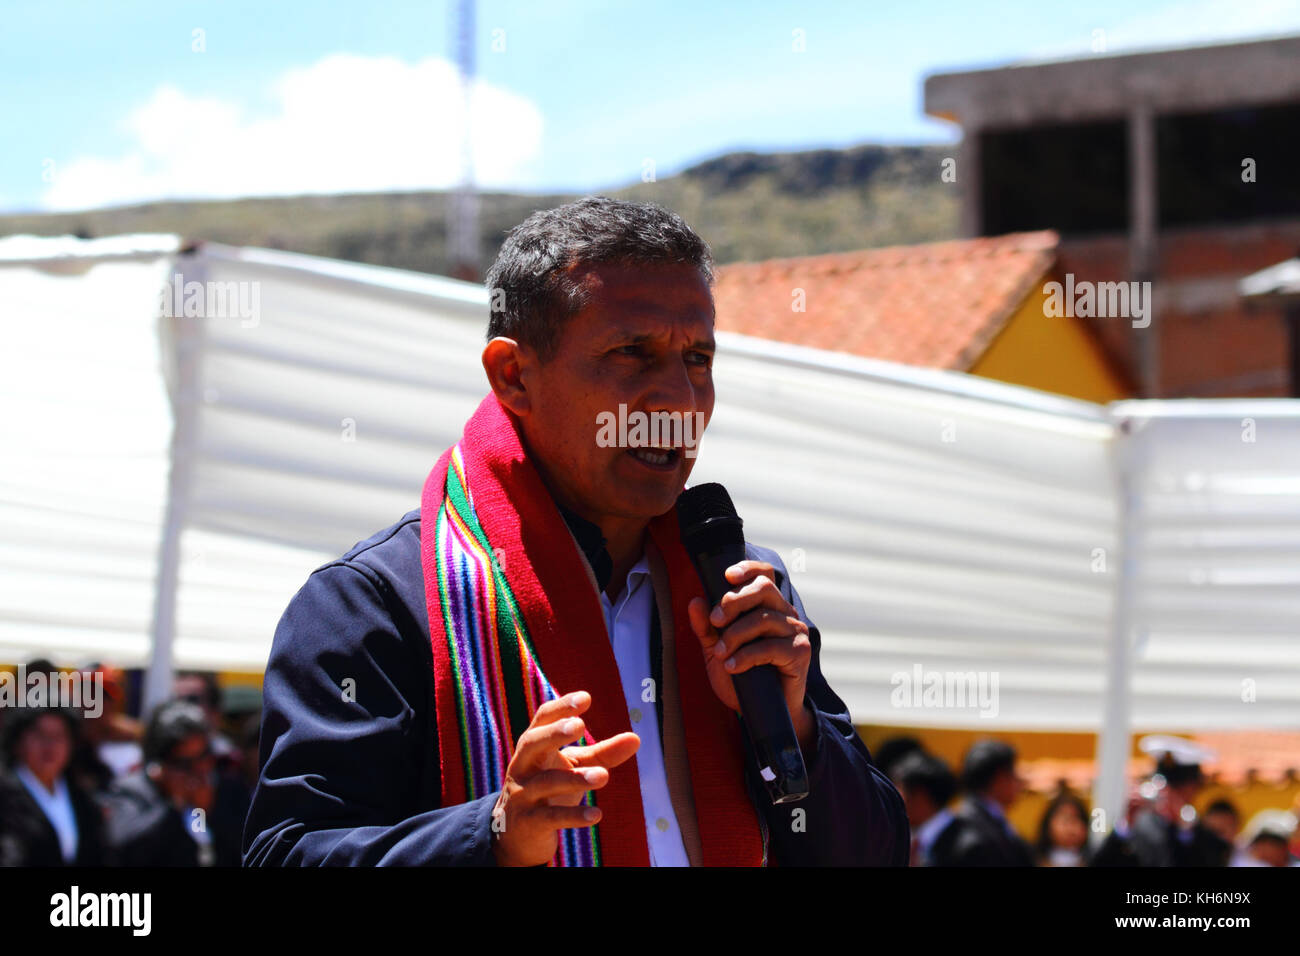 Peruvian president Ollanta Humala makes a speech at the Virgen de la Candelaria festival, Puno, Peru Stock Photo